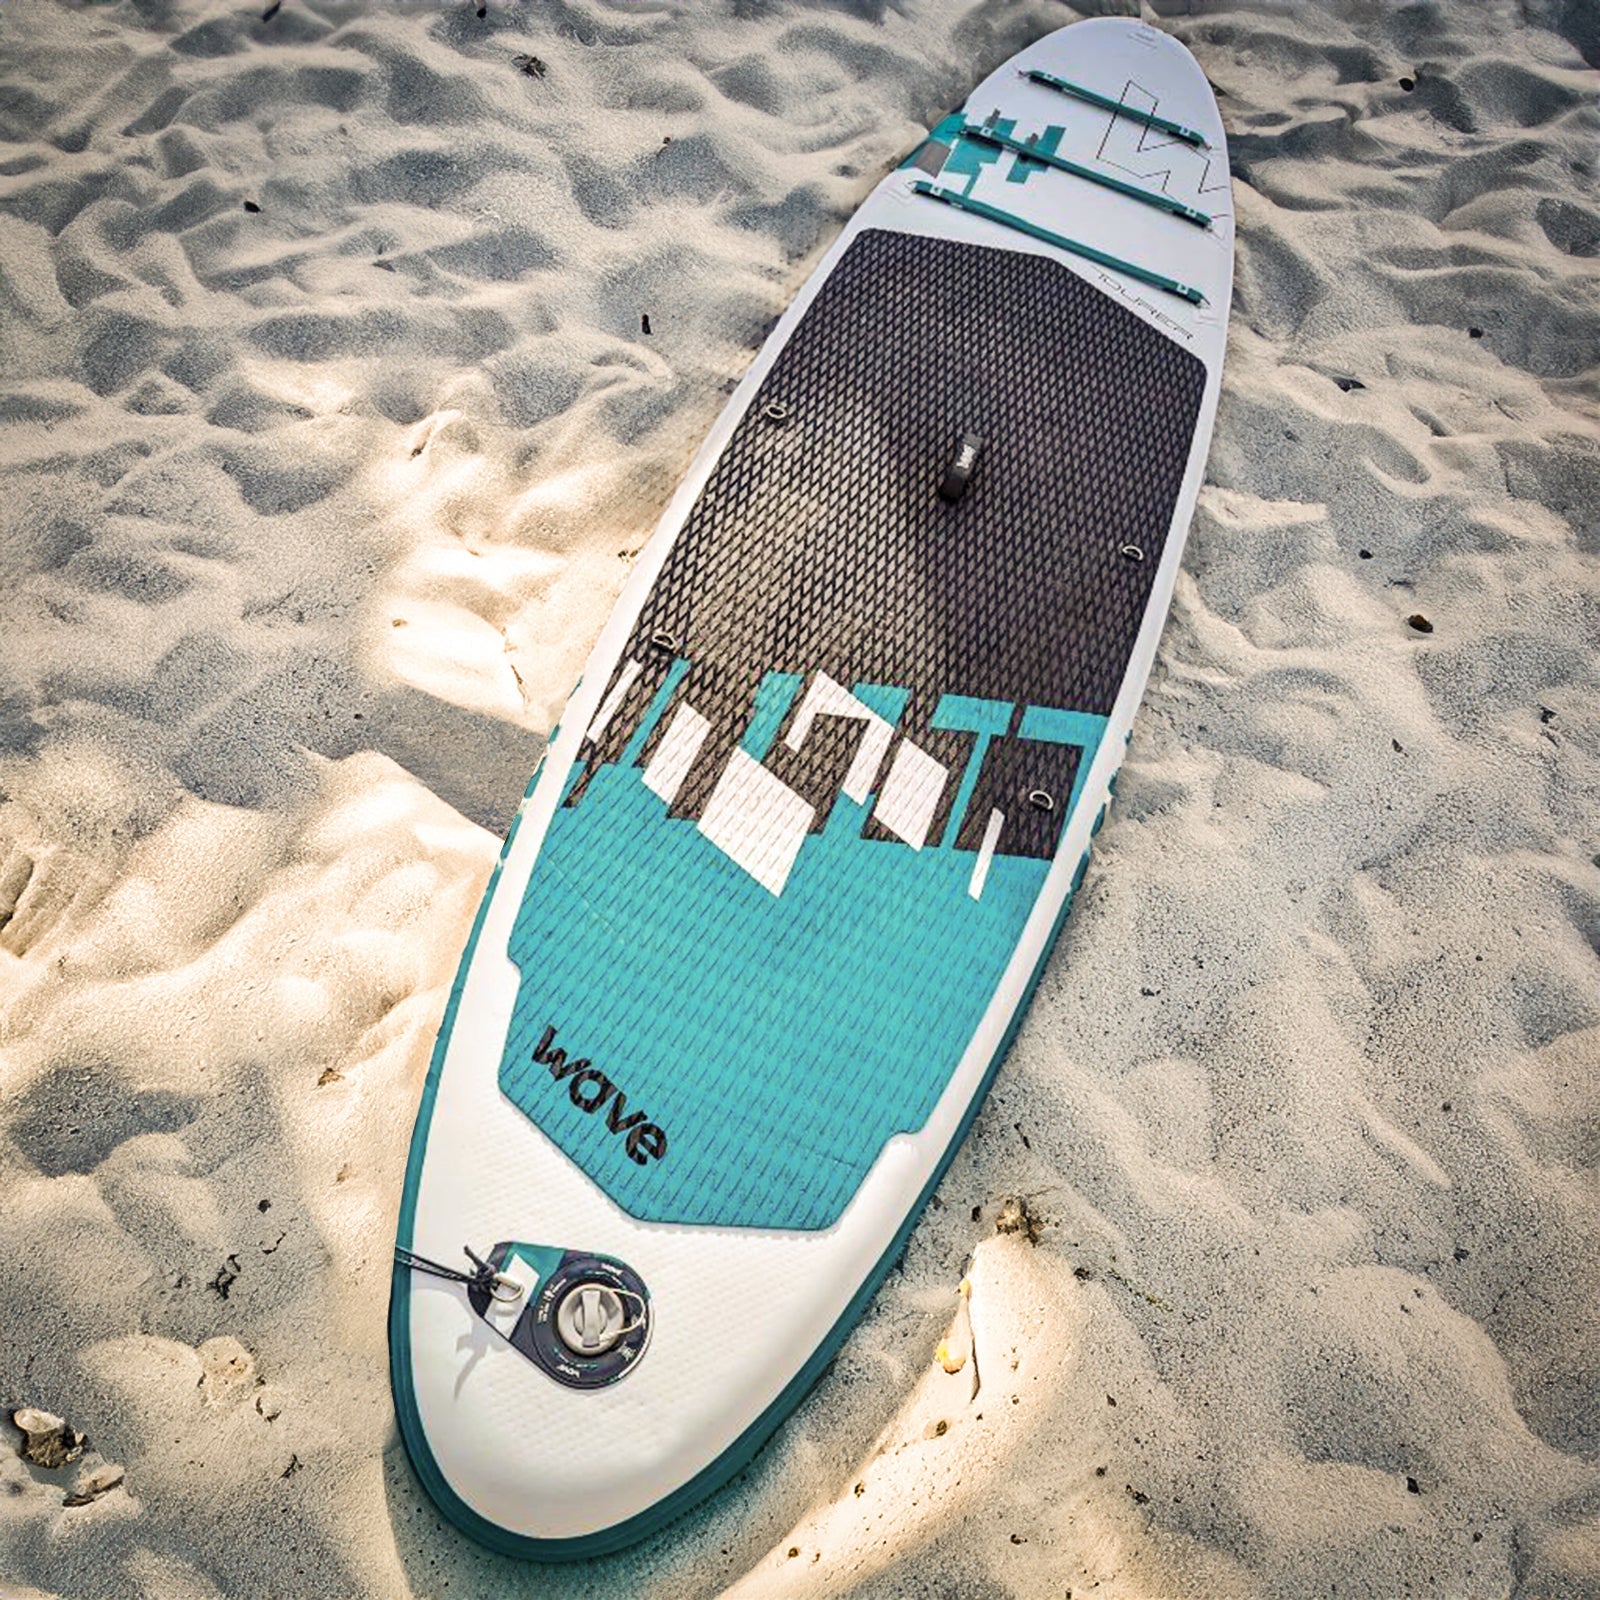 Tourer 2.0 SUP | Inflatable Paddleboard | 10'3/11'3ft | White - Wave Sups USA